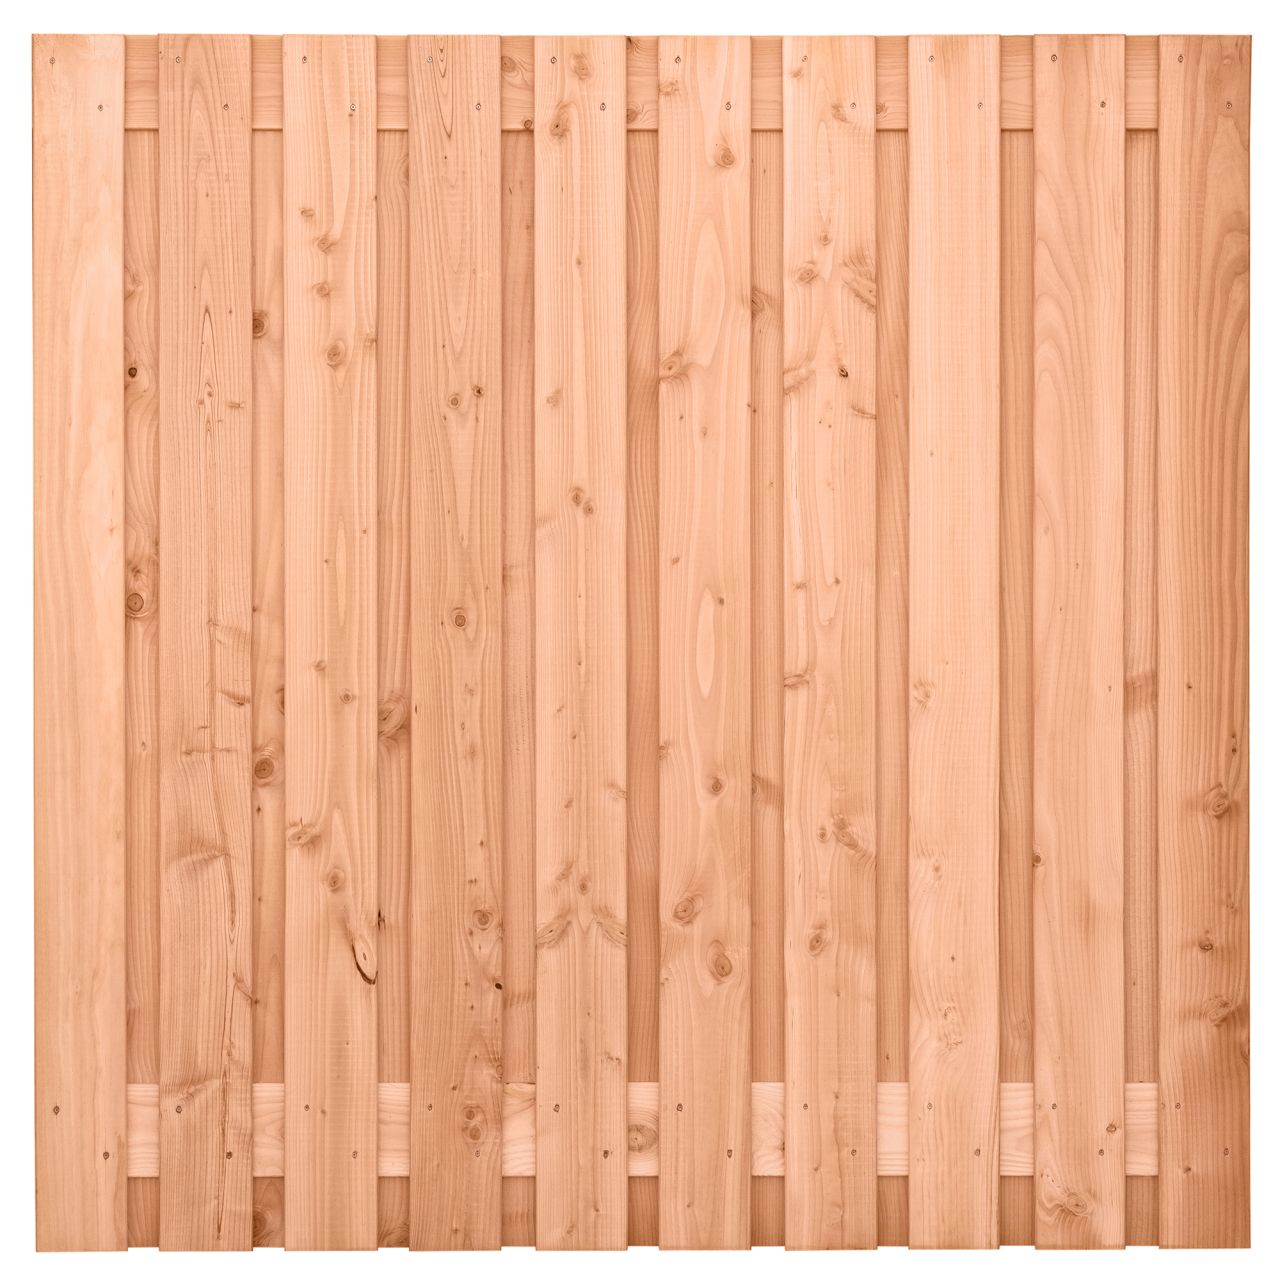 Gaan som Veraangenamen 21 planks Douglas schuttingscherm | 180 x 180cm - Joost Breden B.V.